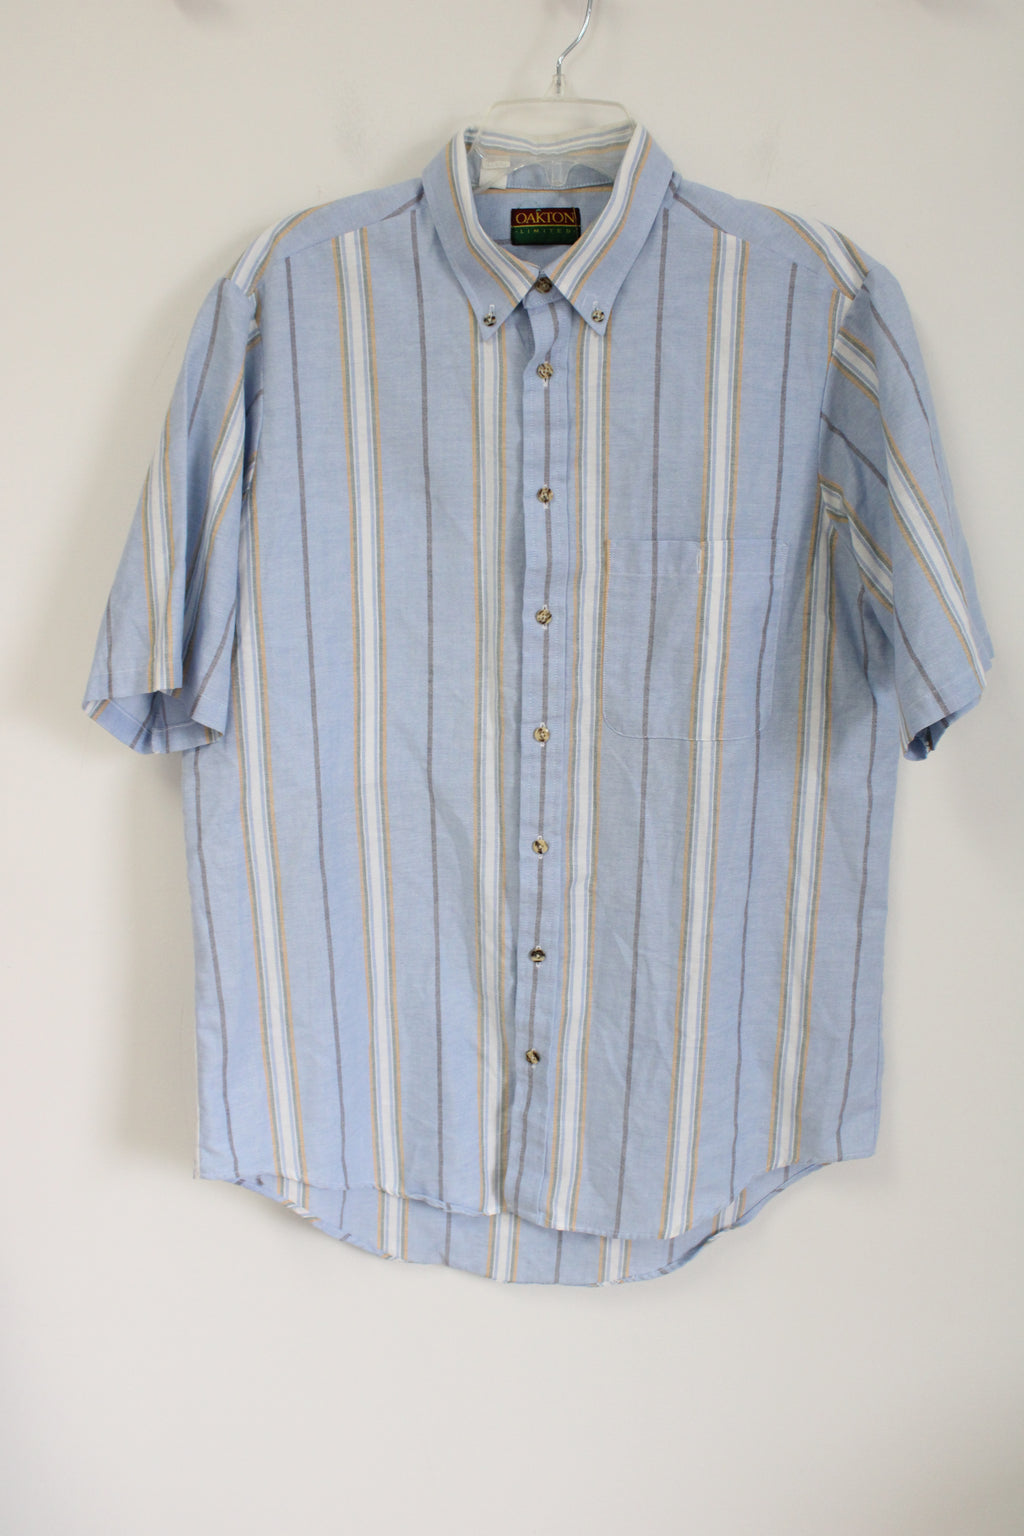 Oakton Limited Blue Striped Button Down Shirt | L Tall